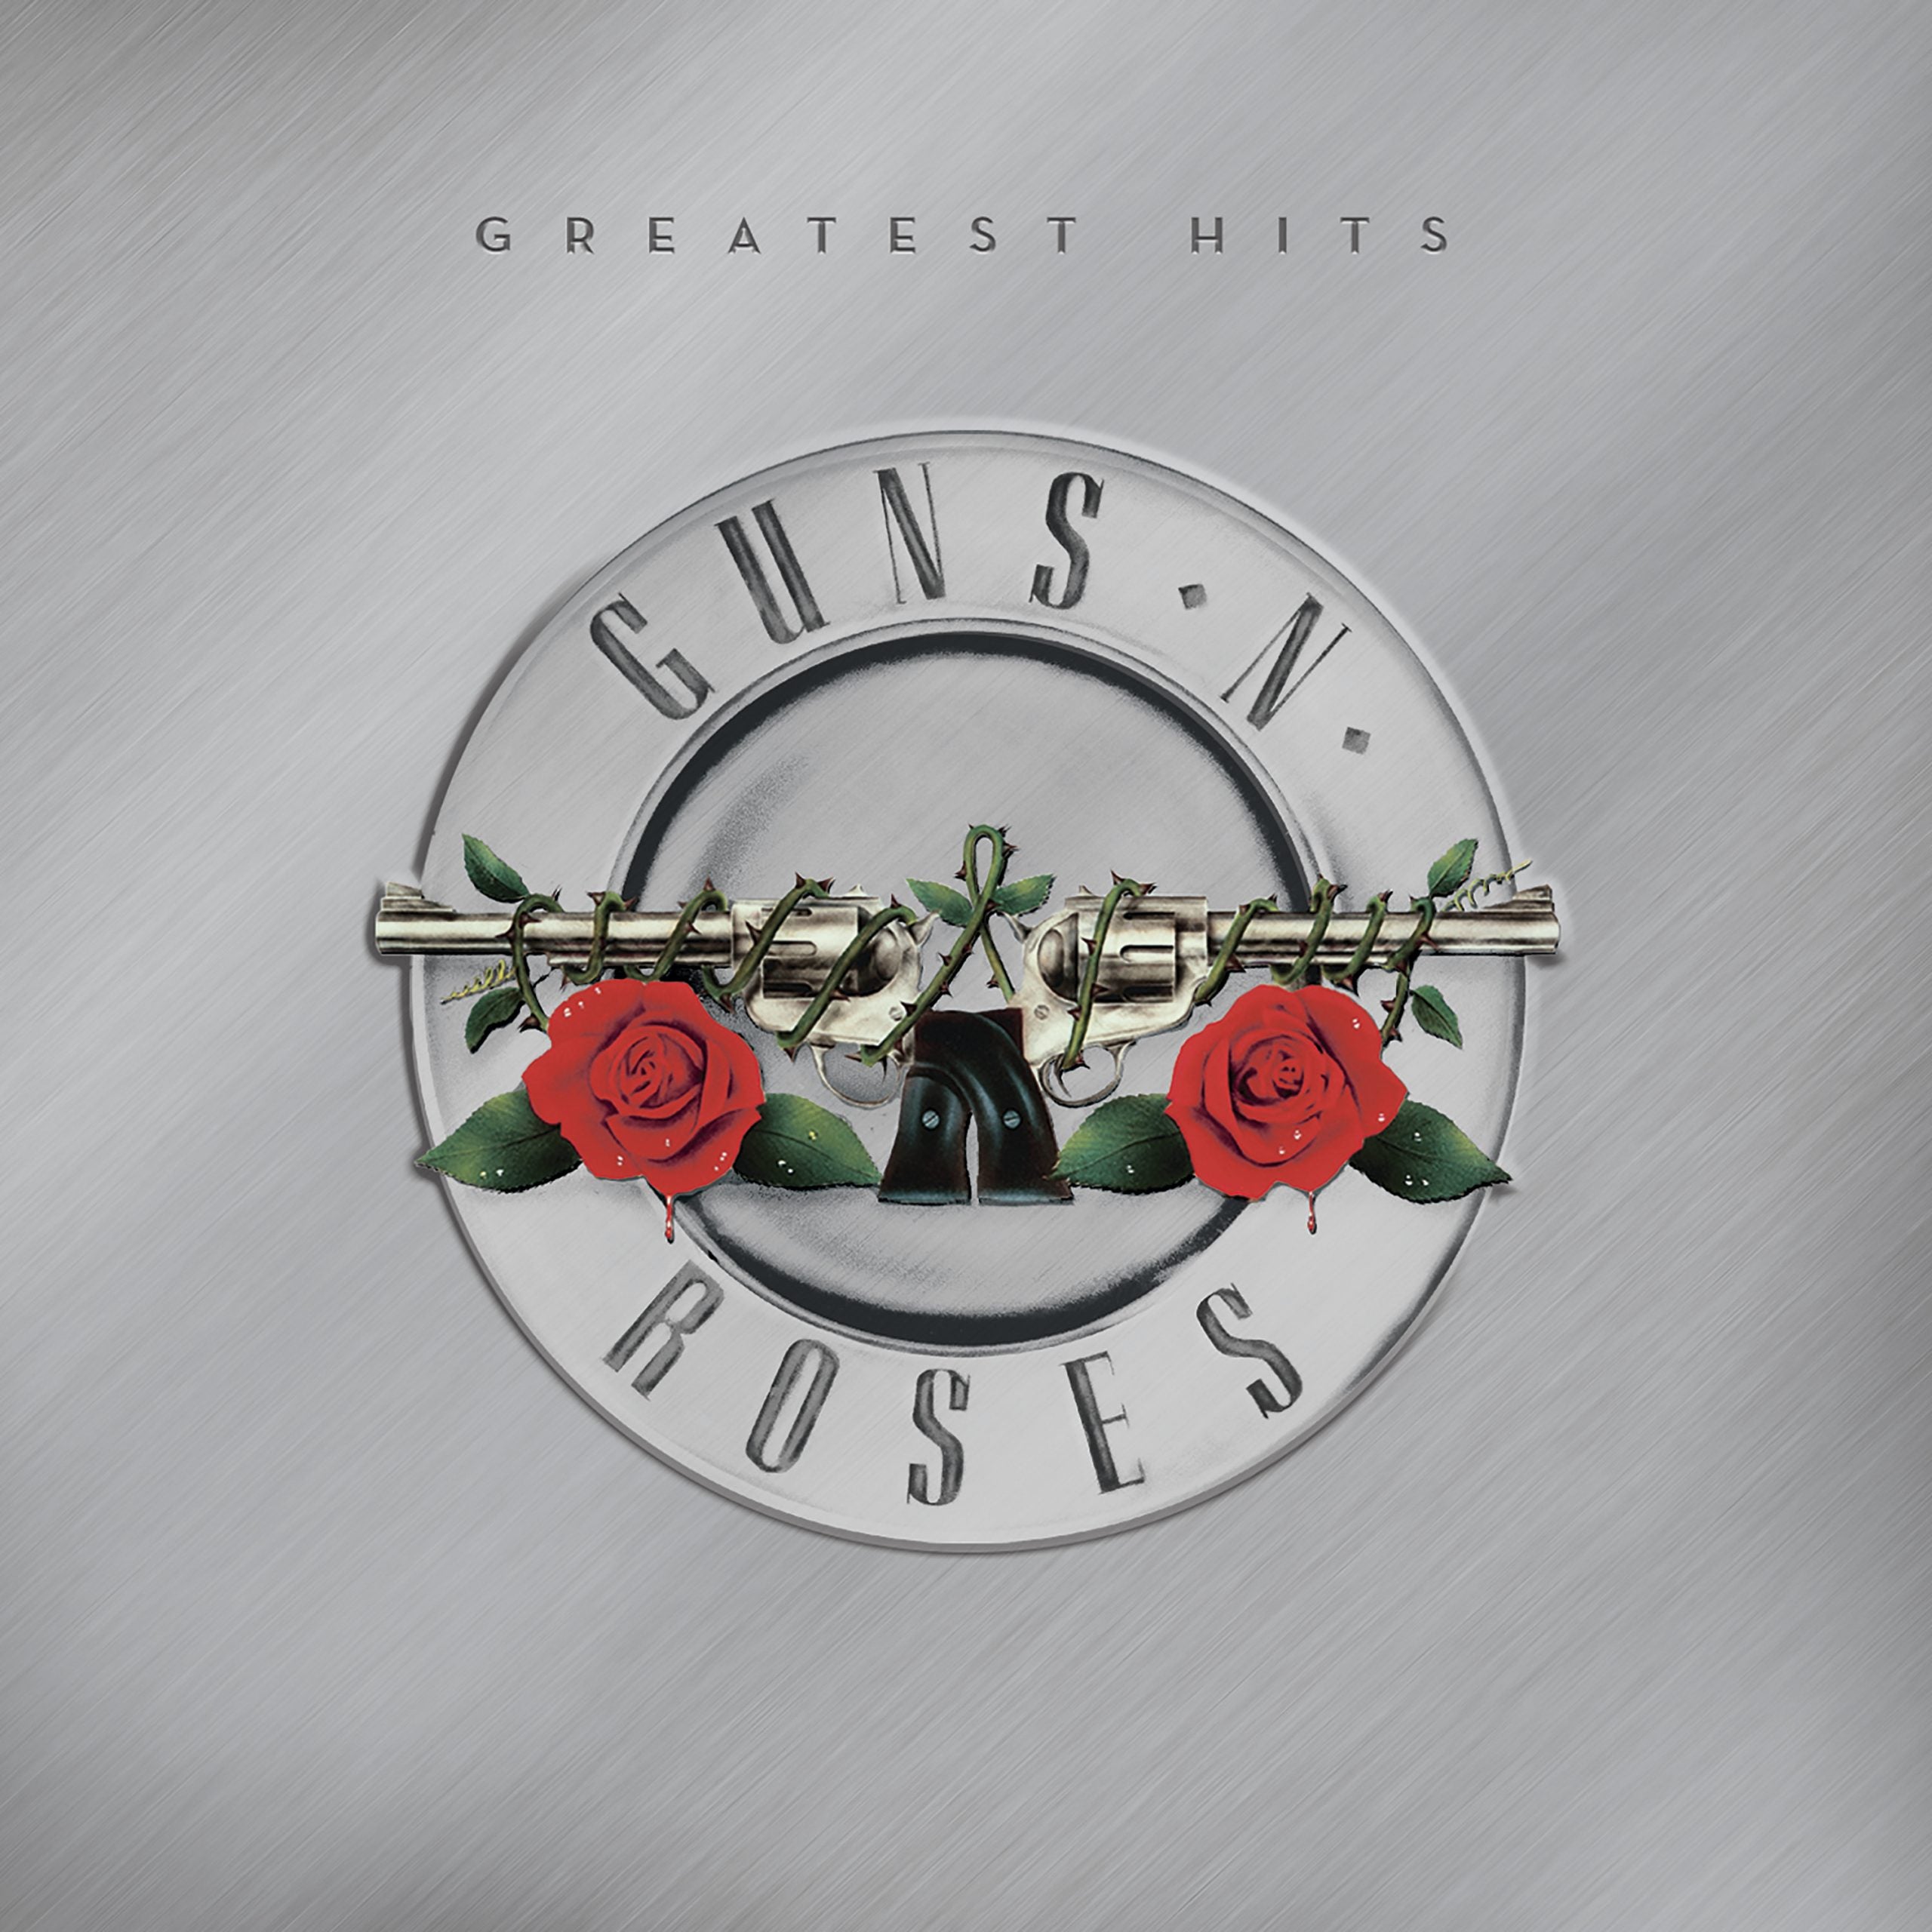 Guns N Roses Greatest Hits - Double Vinyl Album - SILBERSHELL